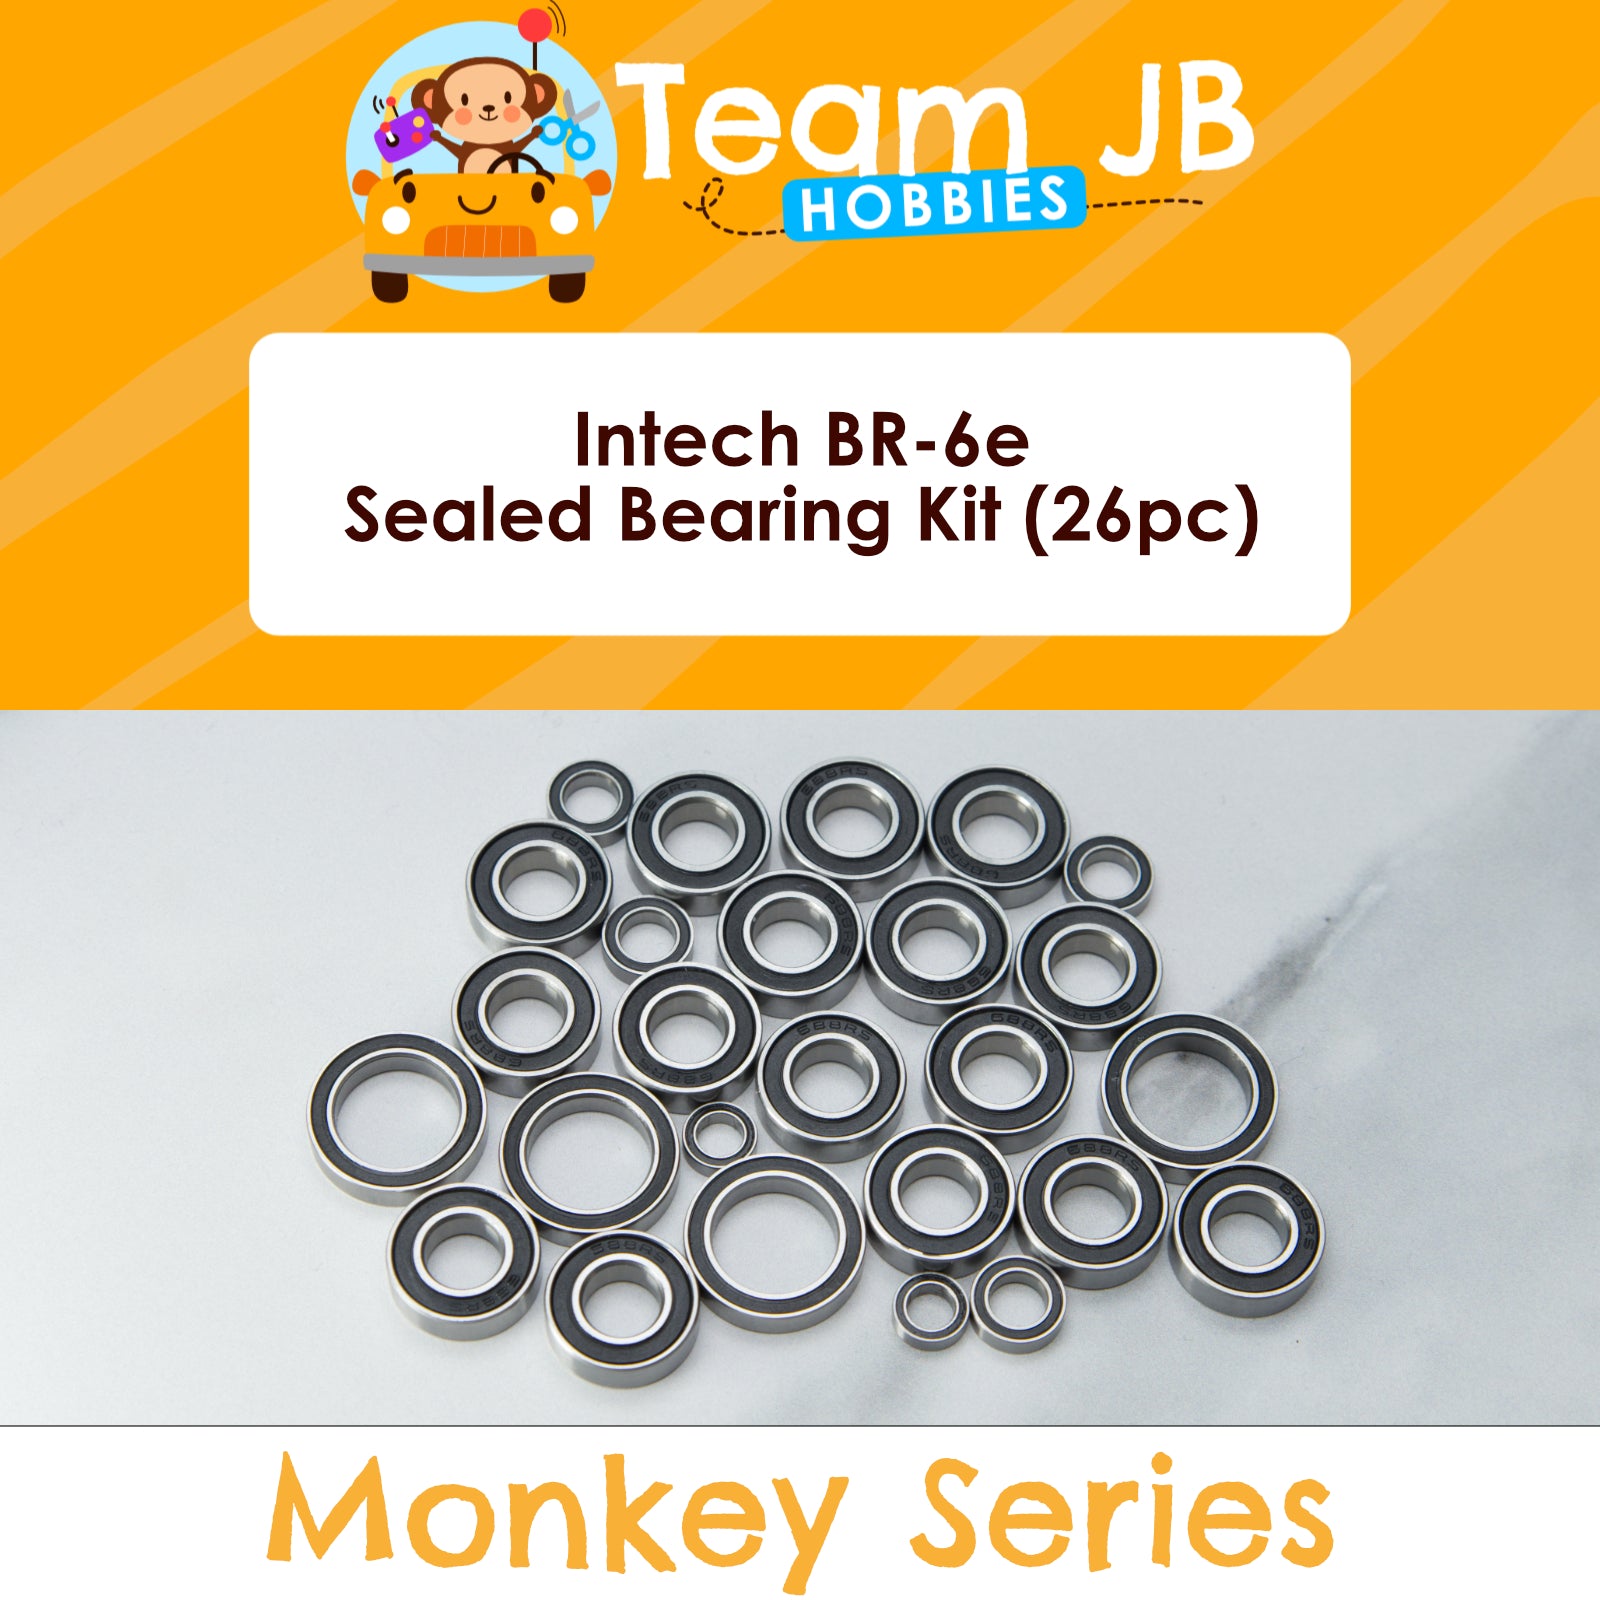 Intech BR-6e - Sealed Bearing Kit